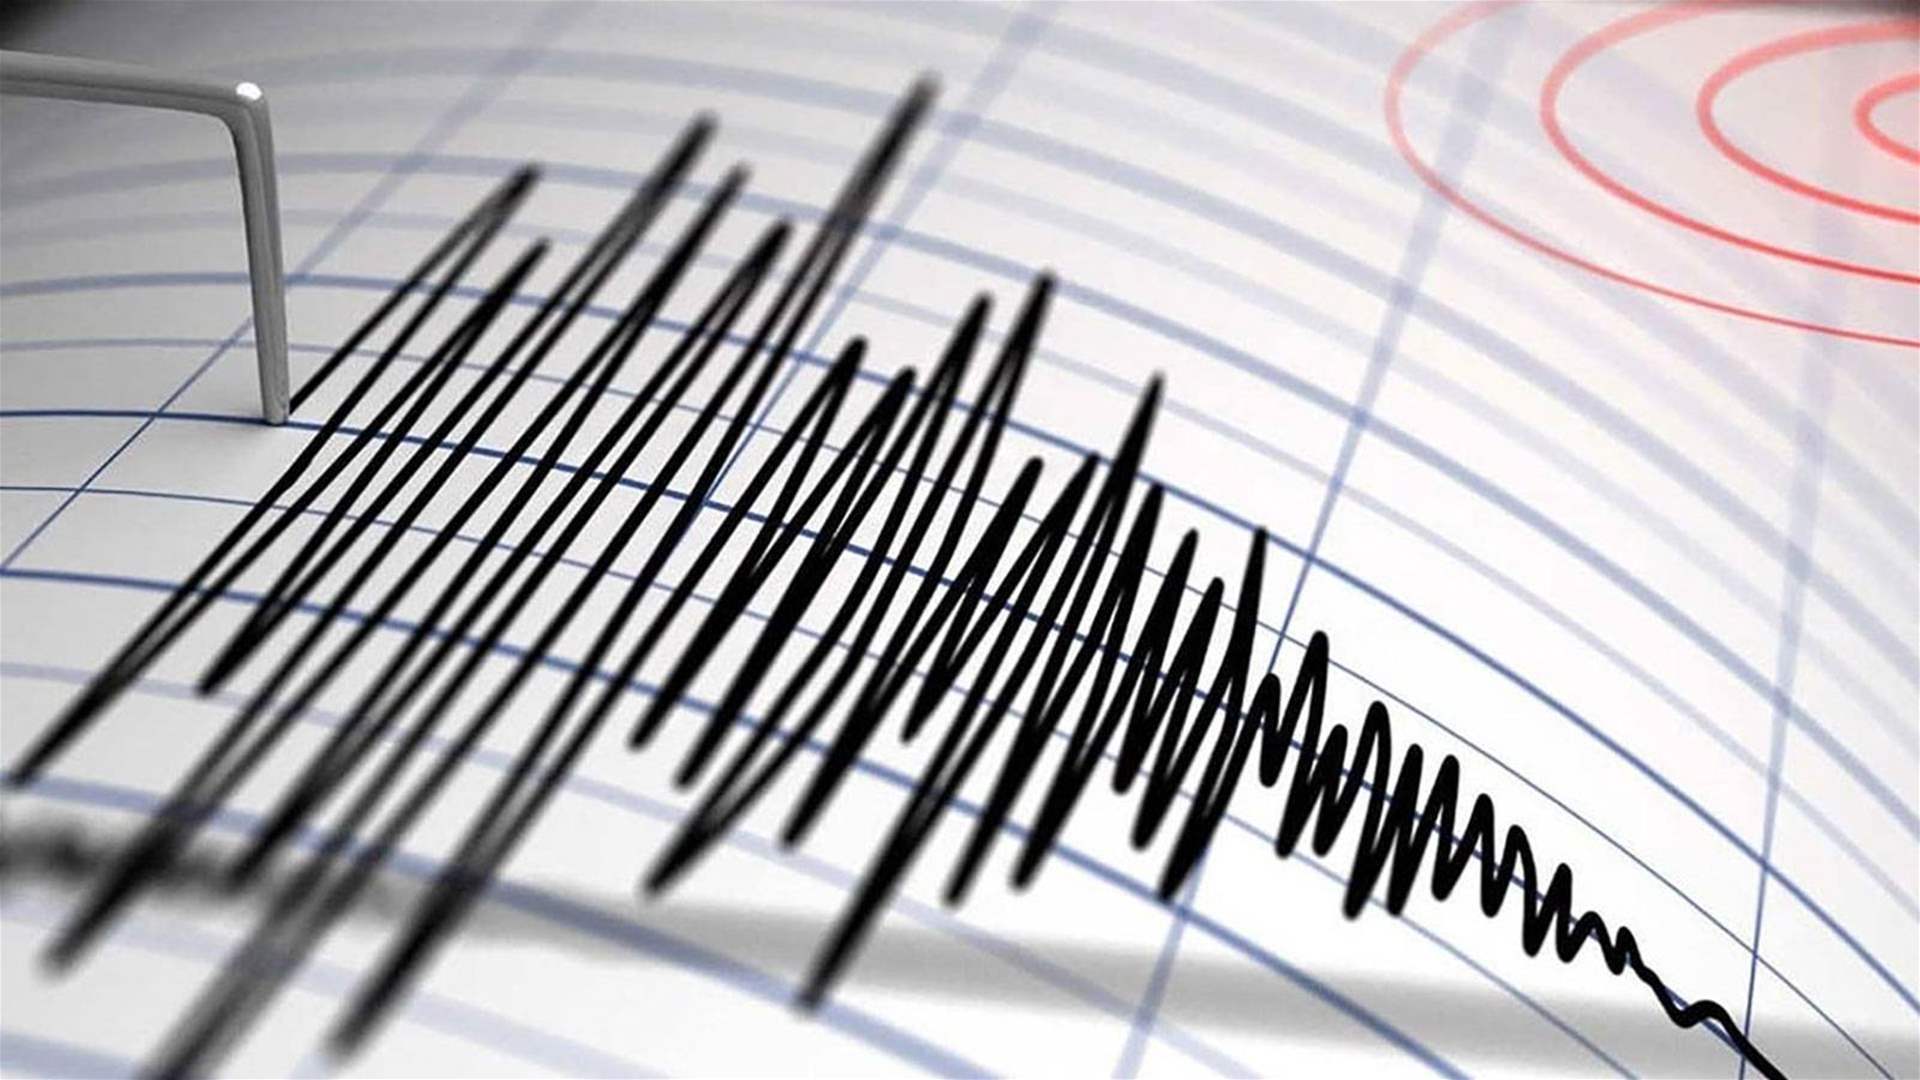 Magnitude 5.6 quake hits Mindanao, Philippines